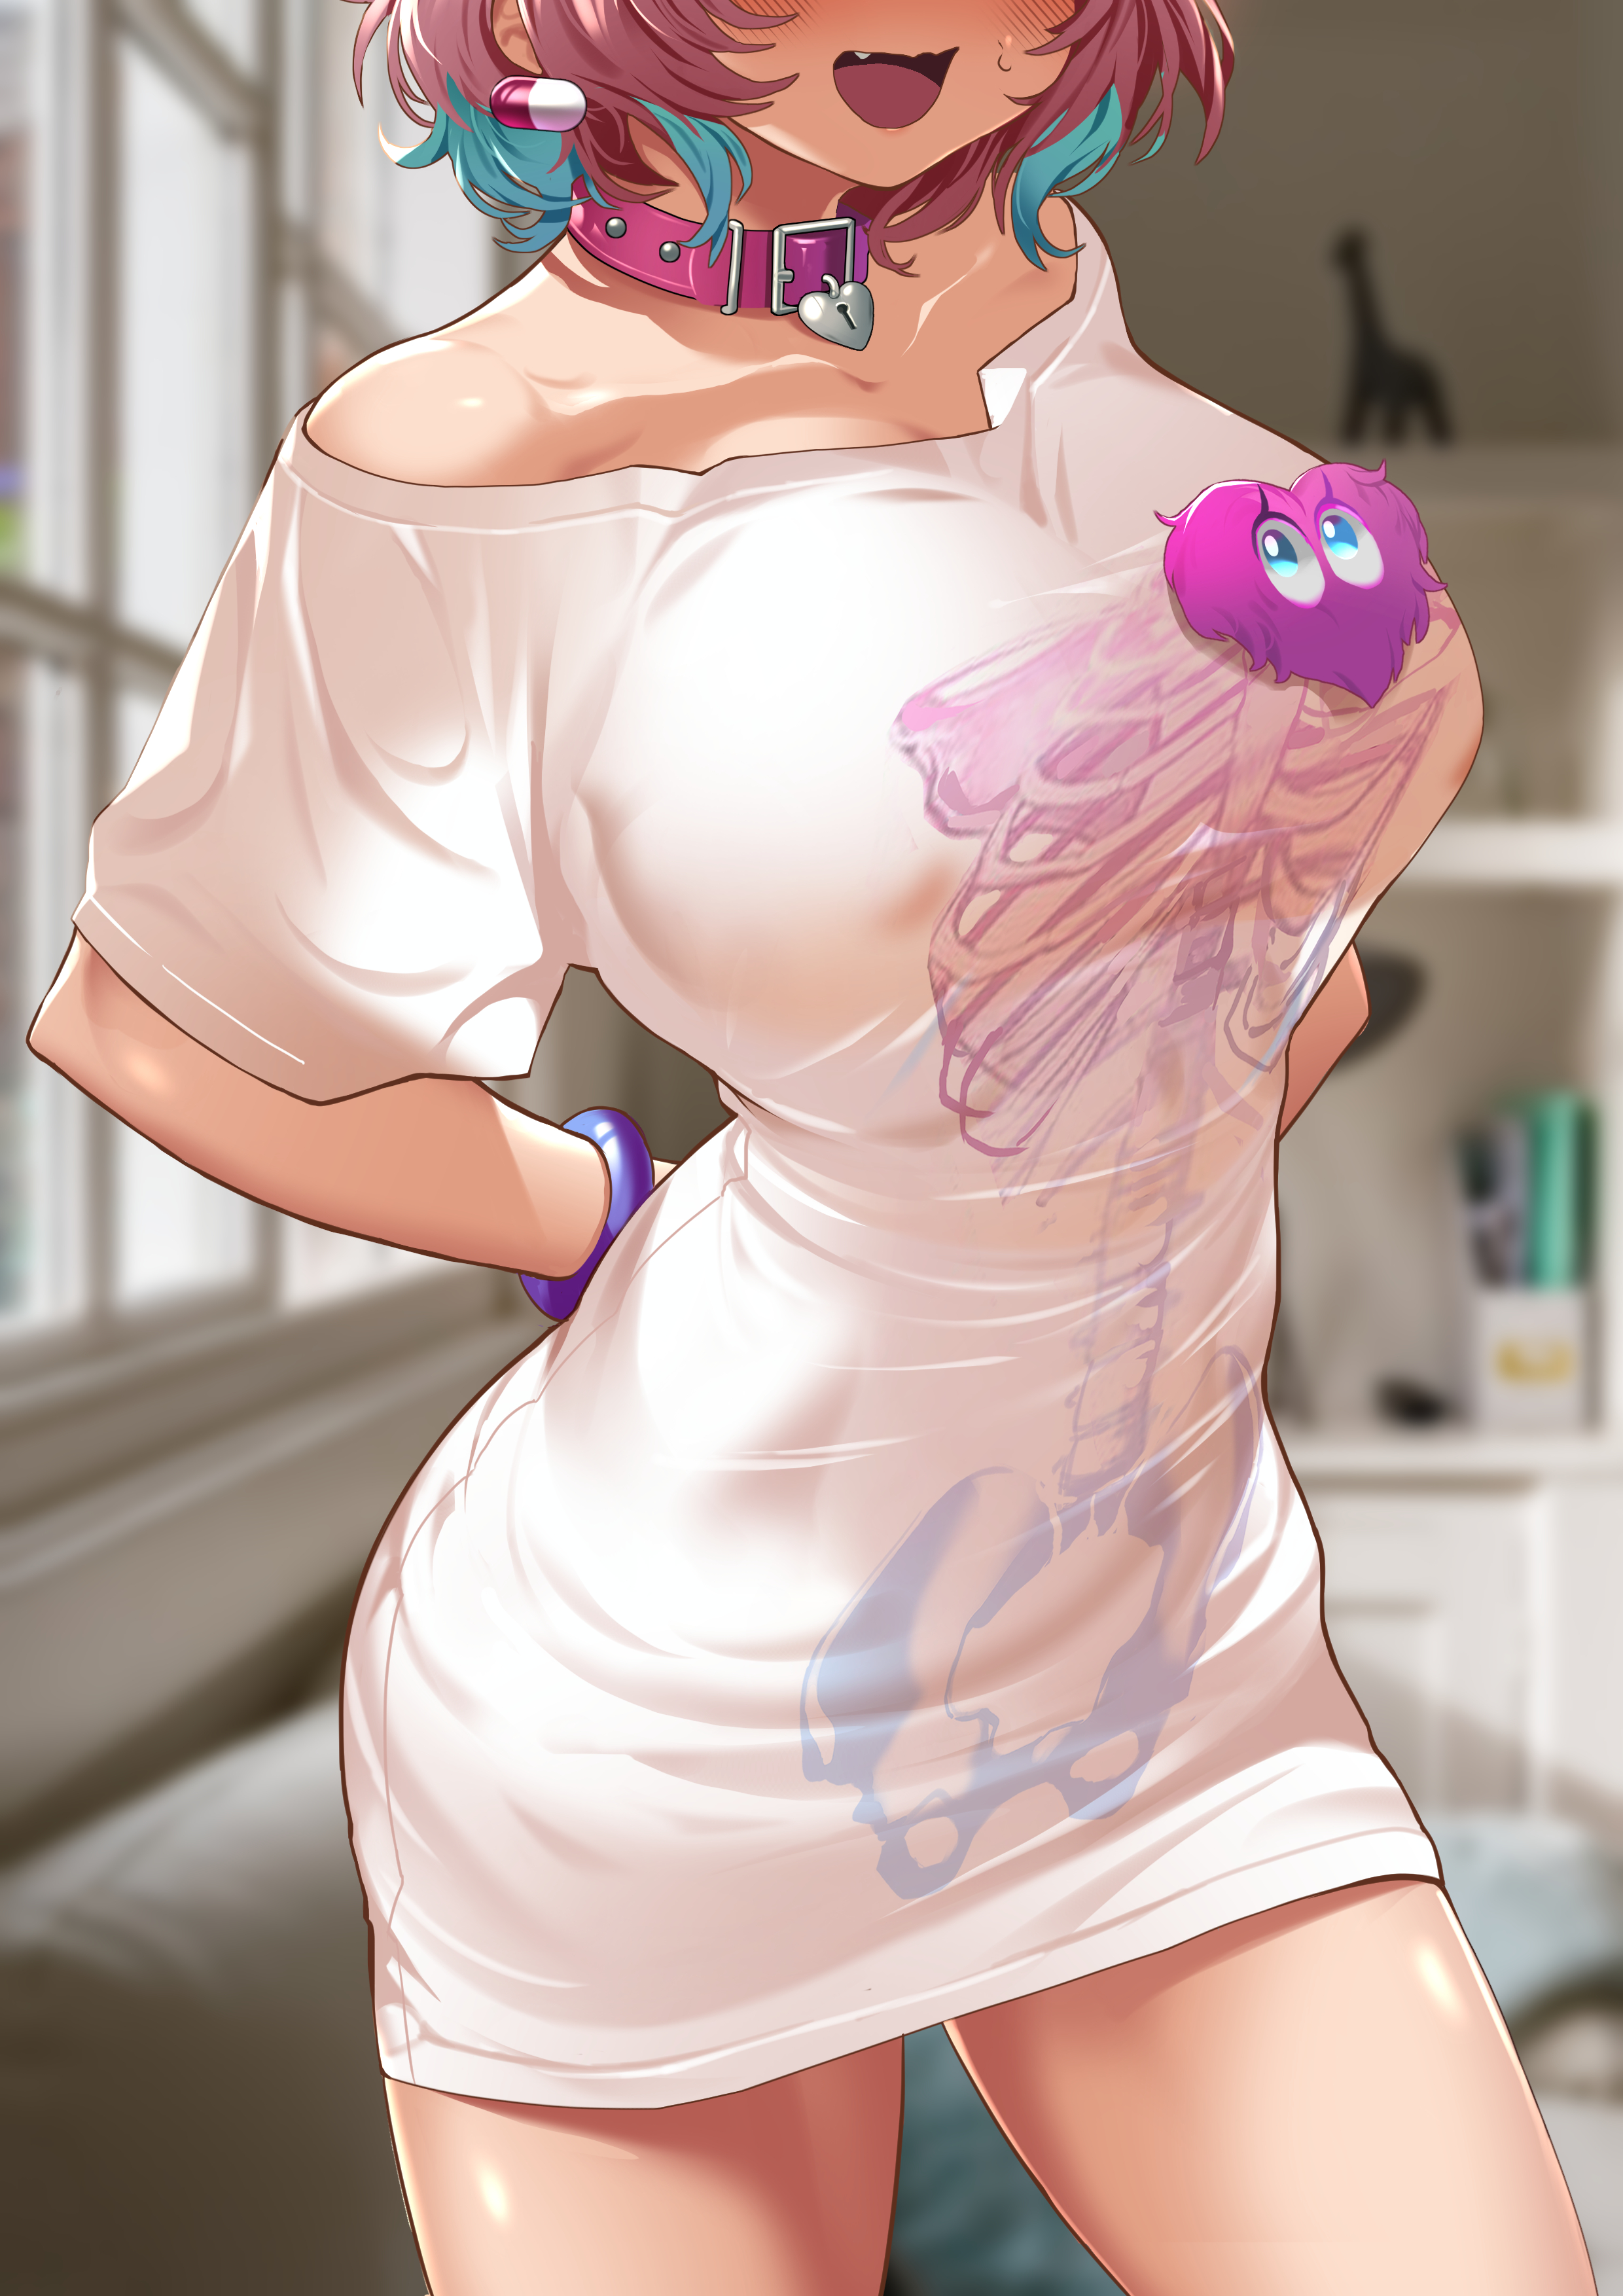 Anime 2480x3508 anime anime girls digital art artwork 2D portrait display Bsue THE iDOLM@STER Riamu Yumemi short hair pink hair collar open mouth T-shirt big boobs